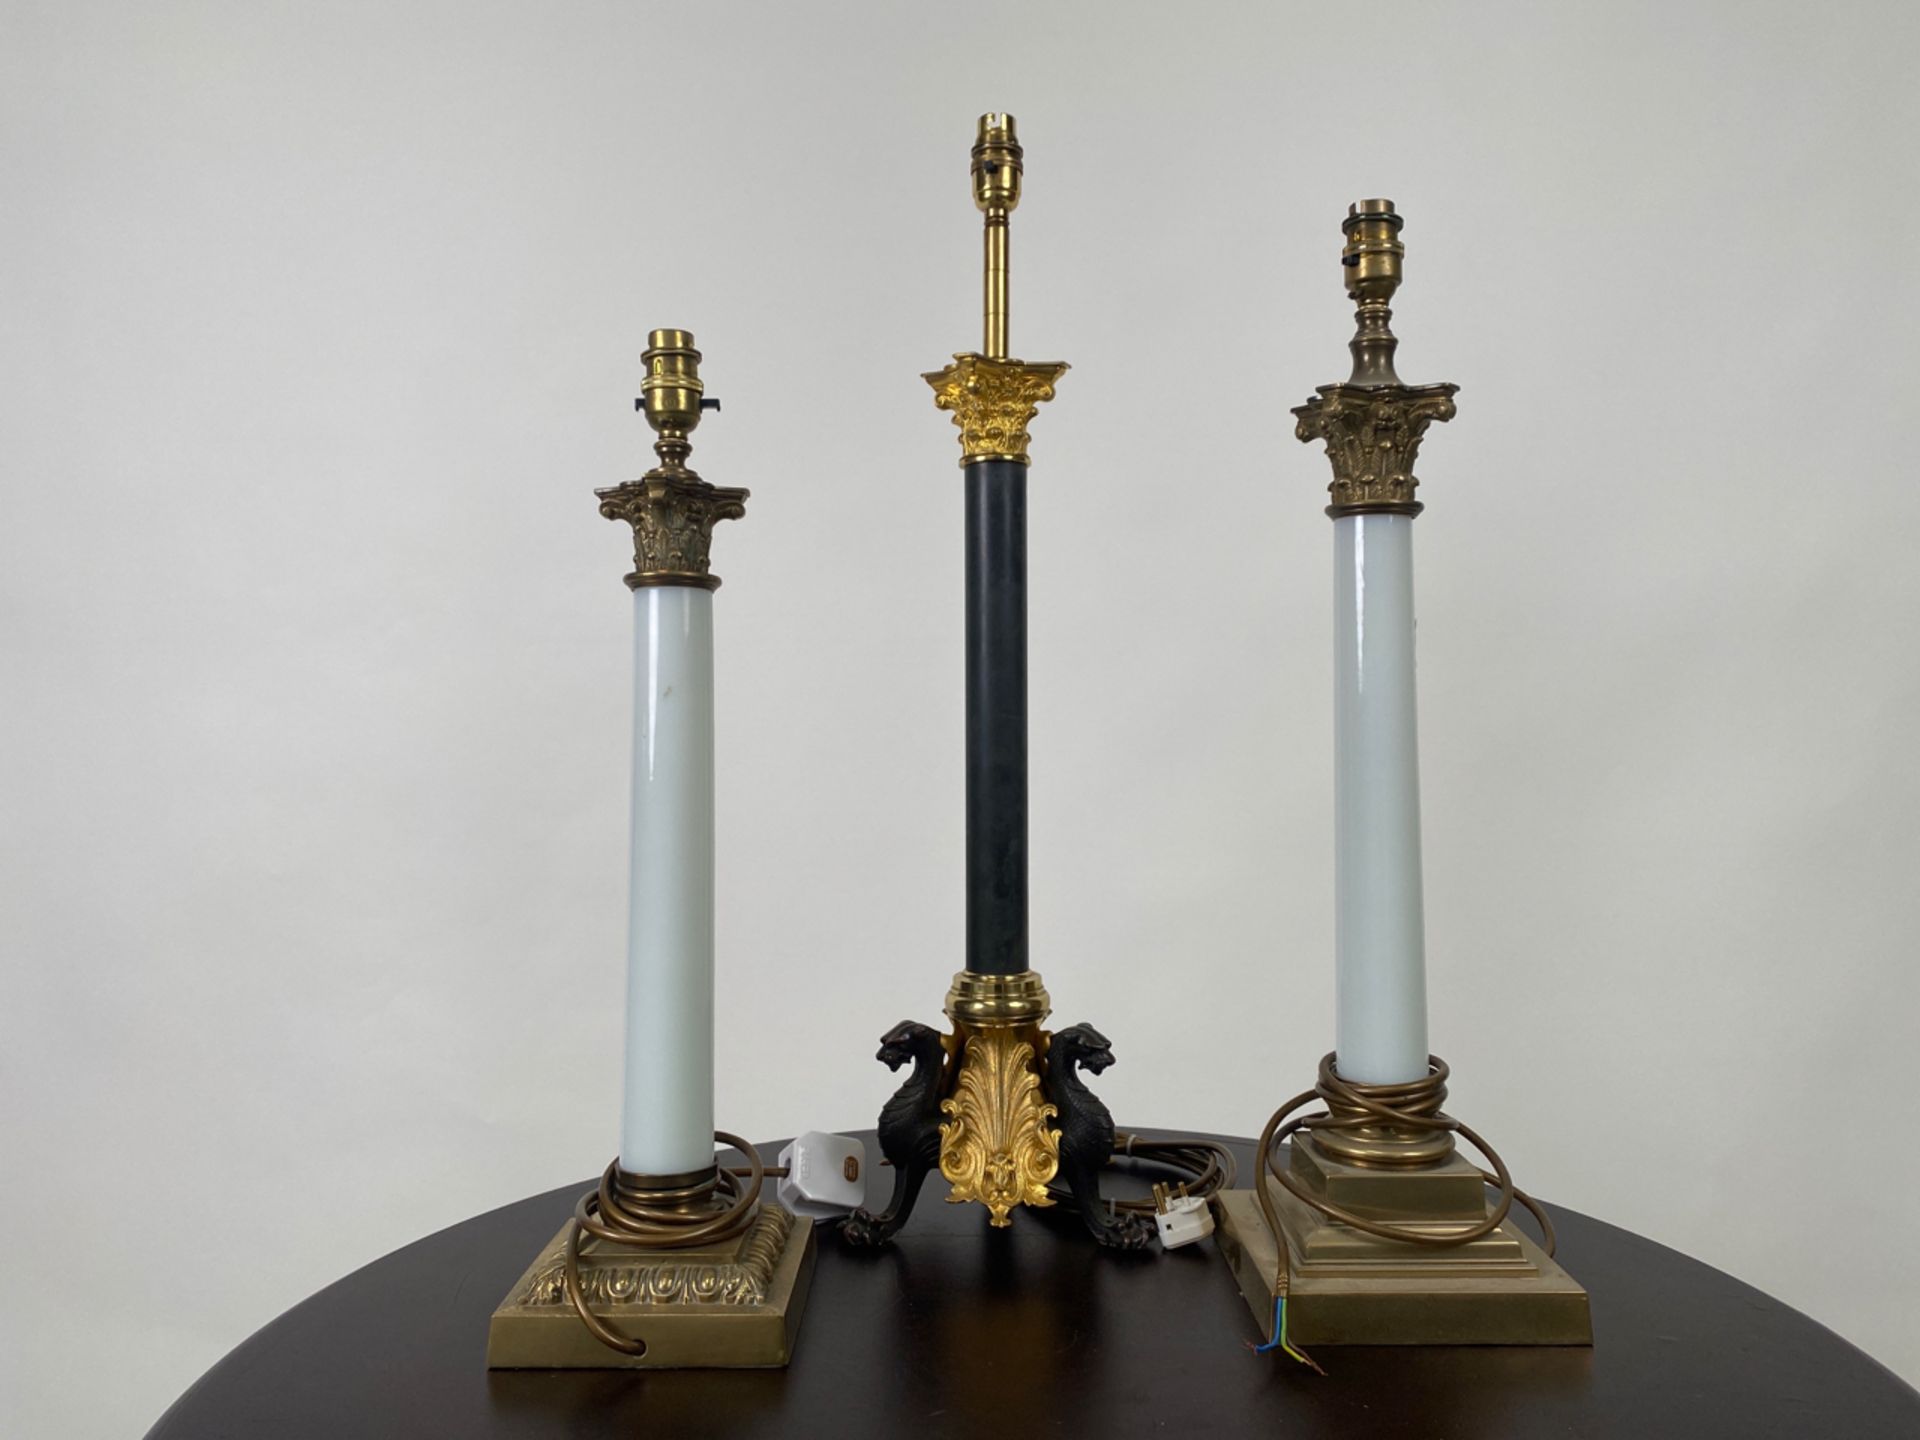 Trio of Decorative Table Lamps